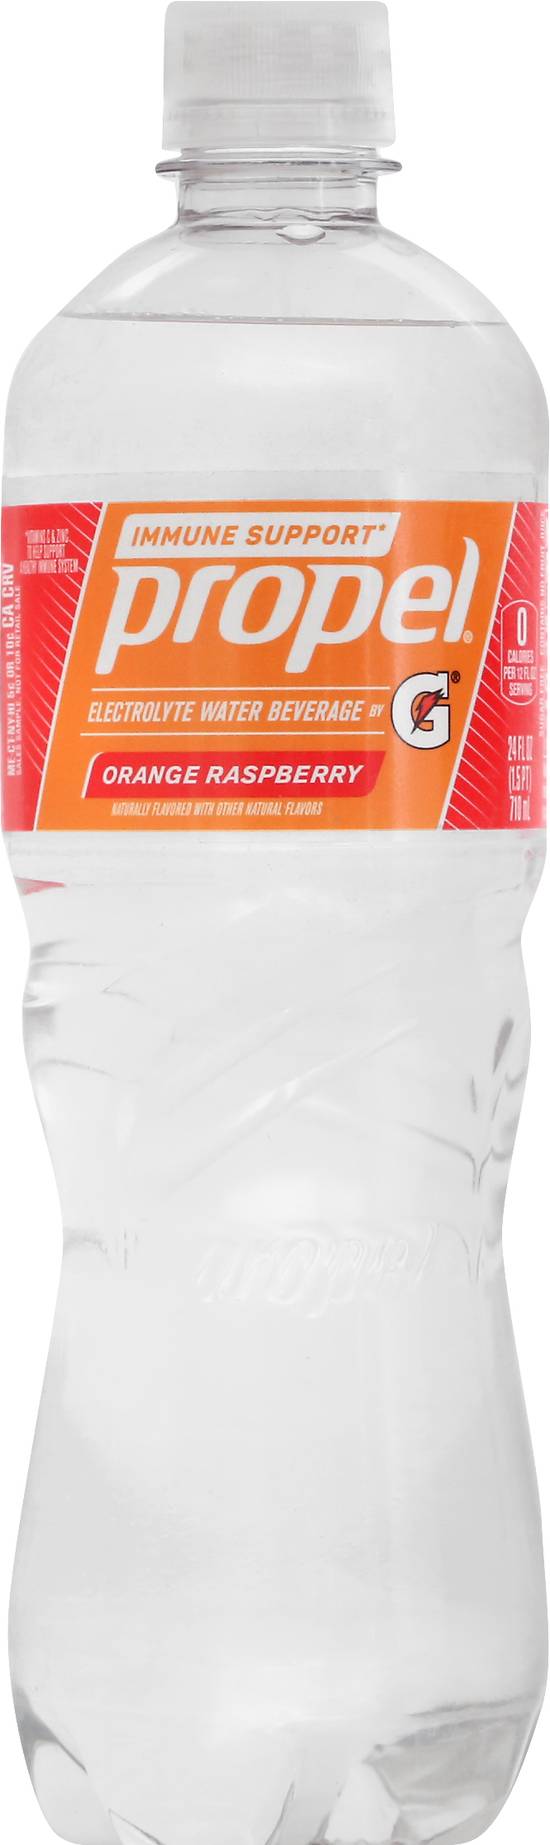 Propel Orange Raspberry Electrolyte Water Beverage (24 fl oz)